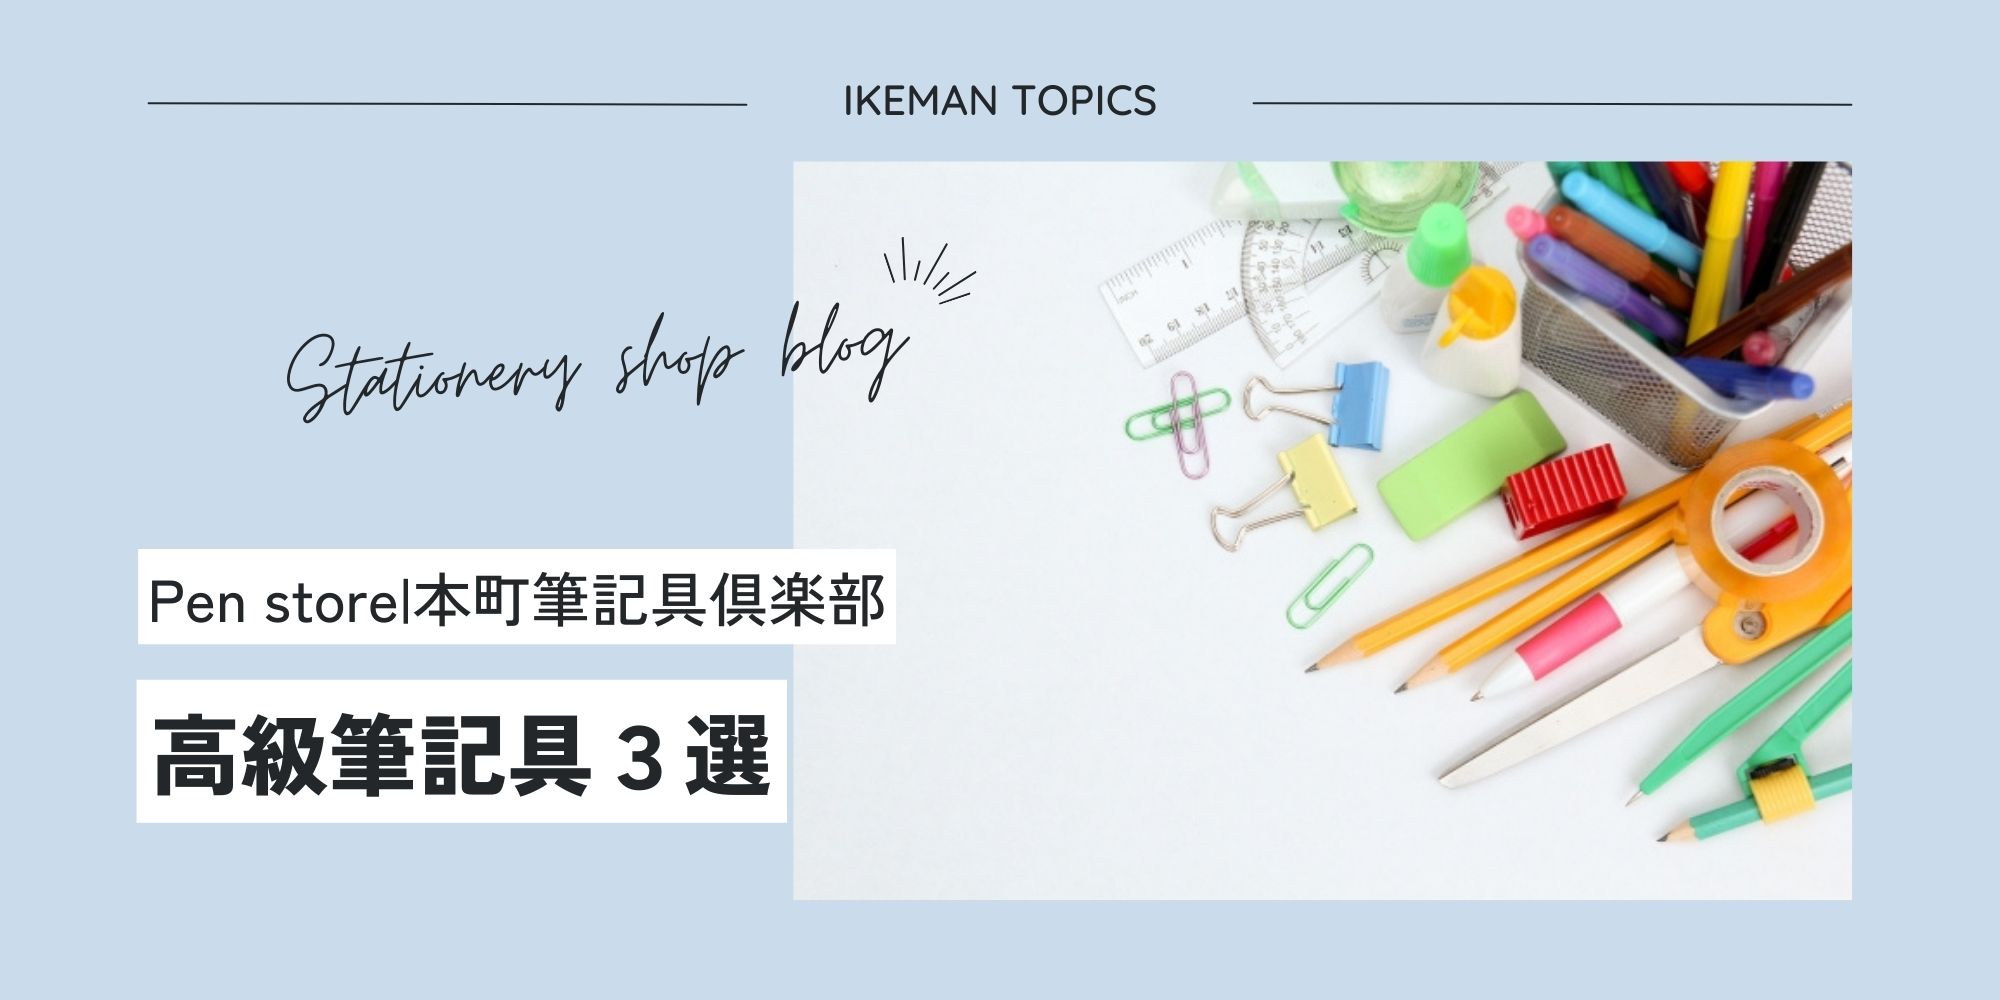 IKEMAN 是大阪的钢笔店!! 购买高品质日本钢笔和豪华书写工具